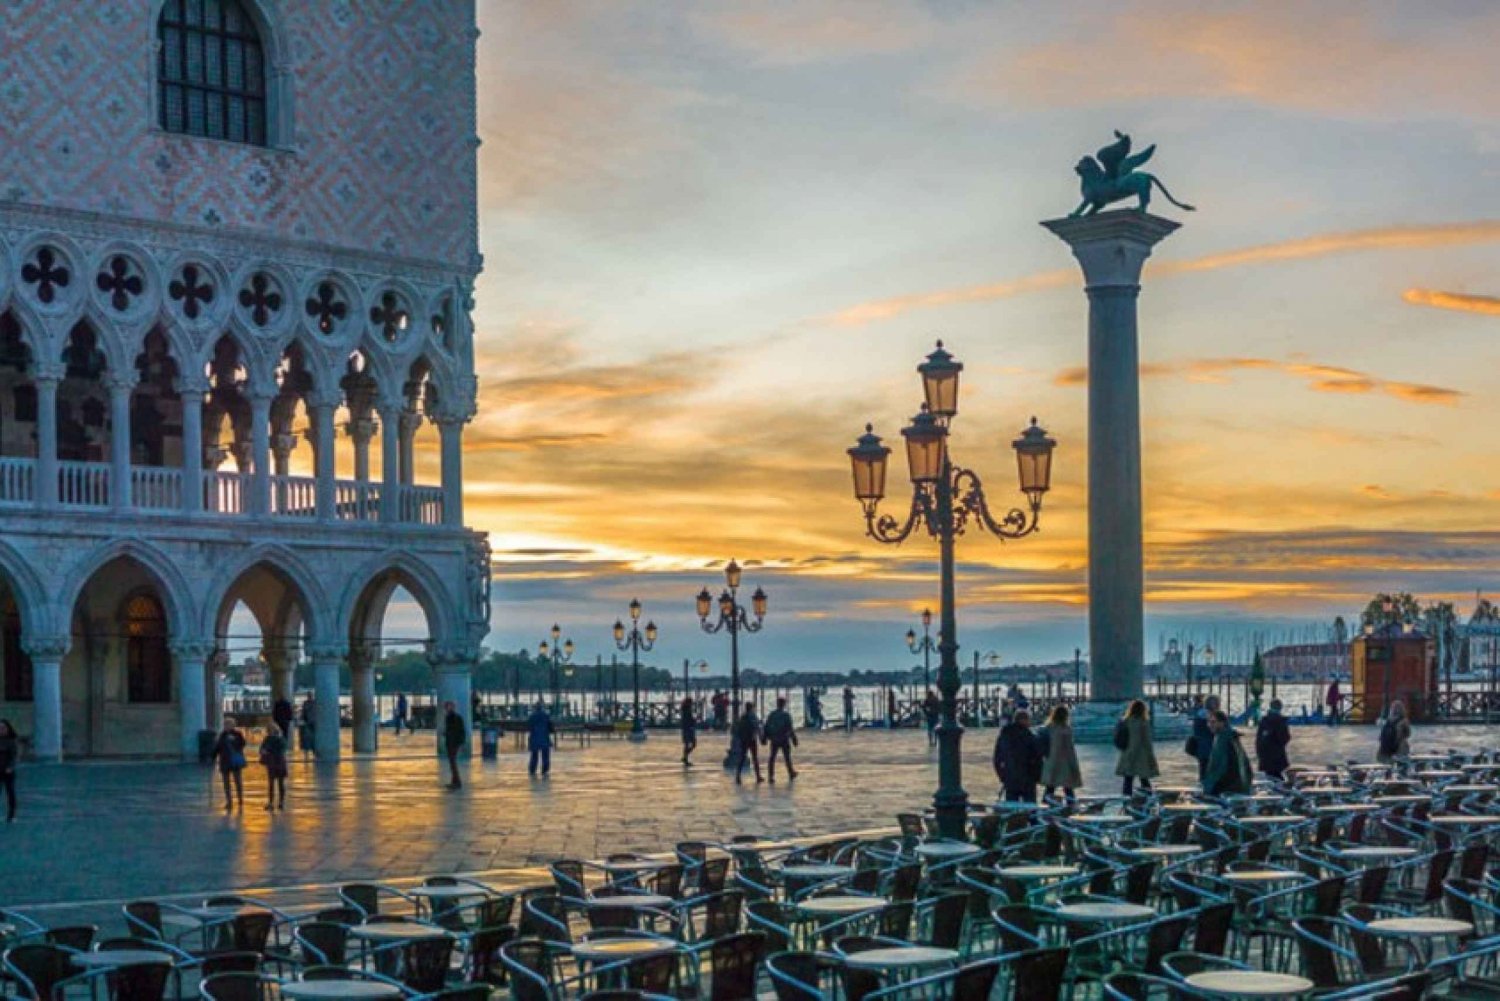 Venice: St Mark's Basilica, Doge's Palace, and Gondola Ride